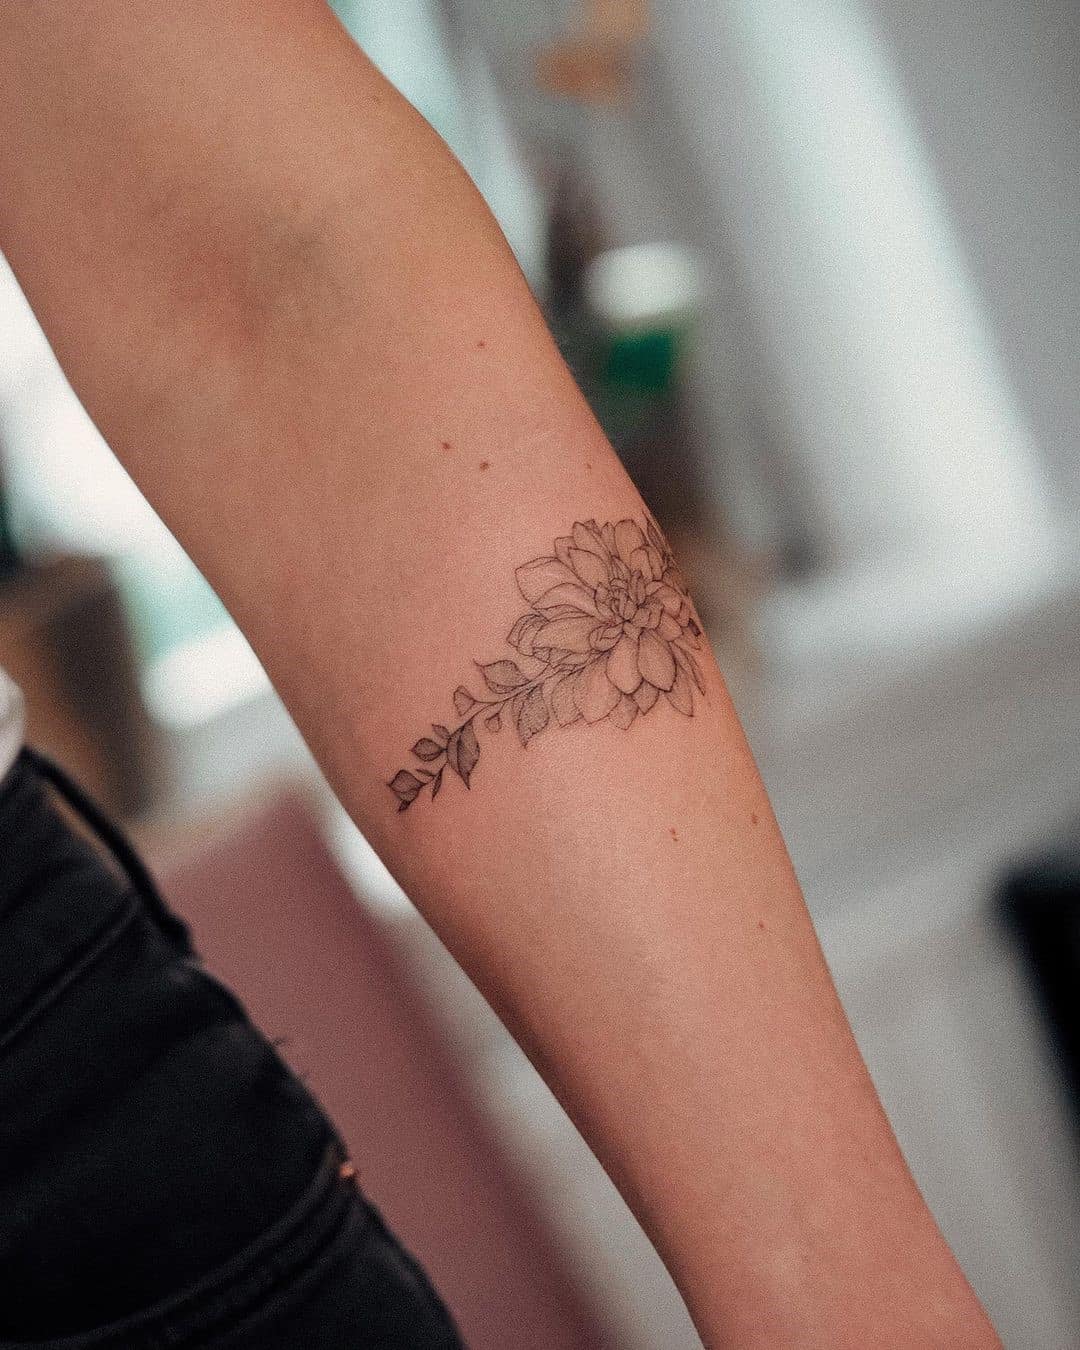 Cute Feminine Flower Armband Tattoo On Wrist - Tattoo Designs for Women